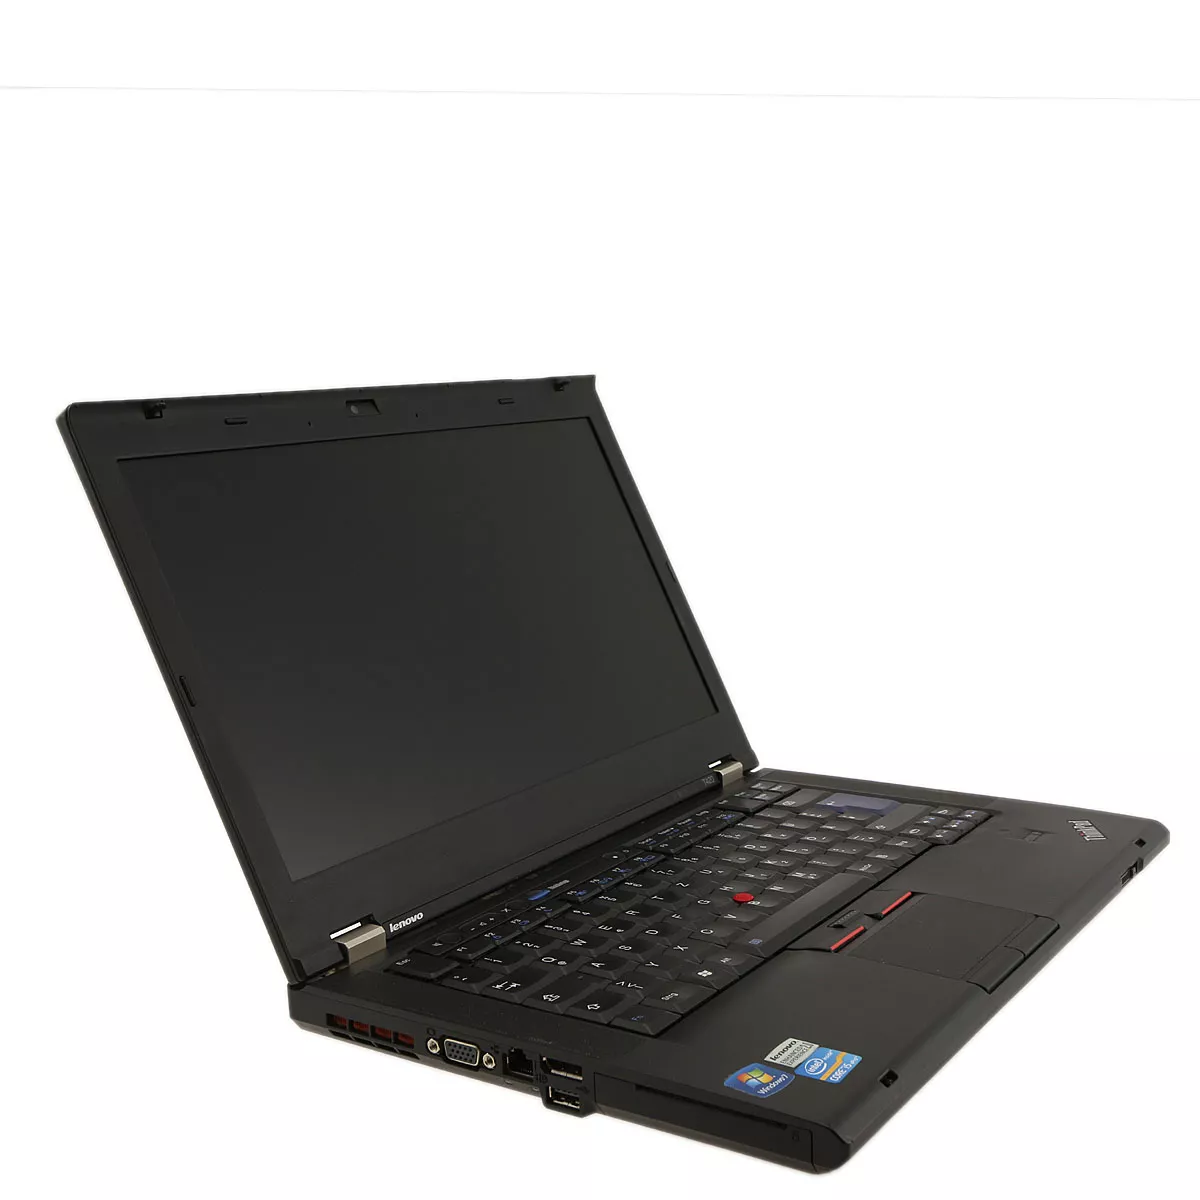 Lenovo ThinkPad T420 Core i5 2520M 2,5 GHz Webcam